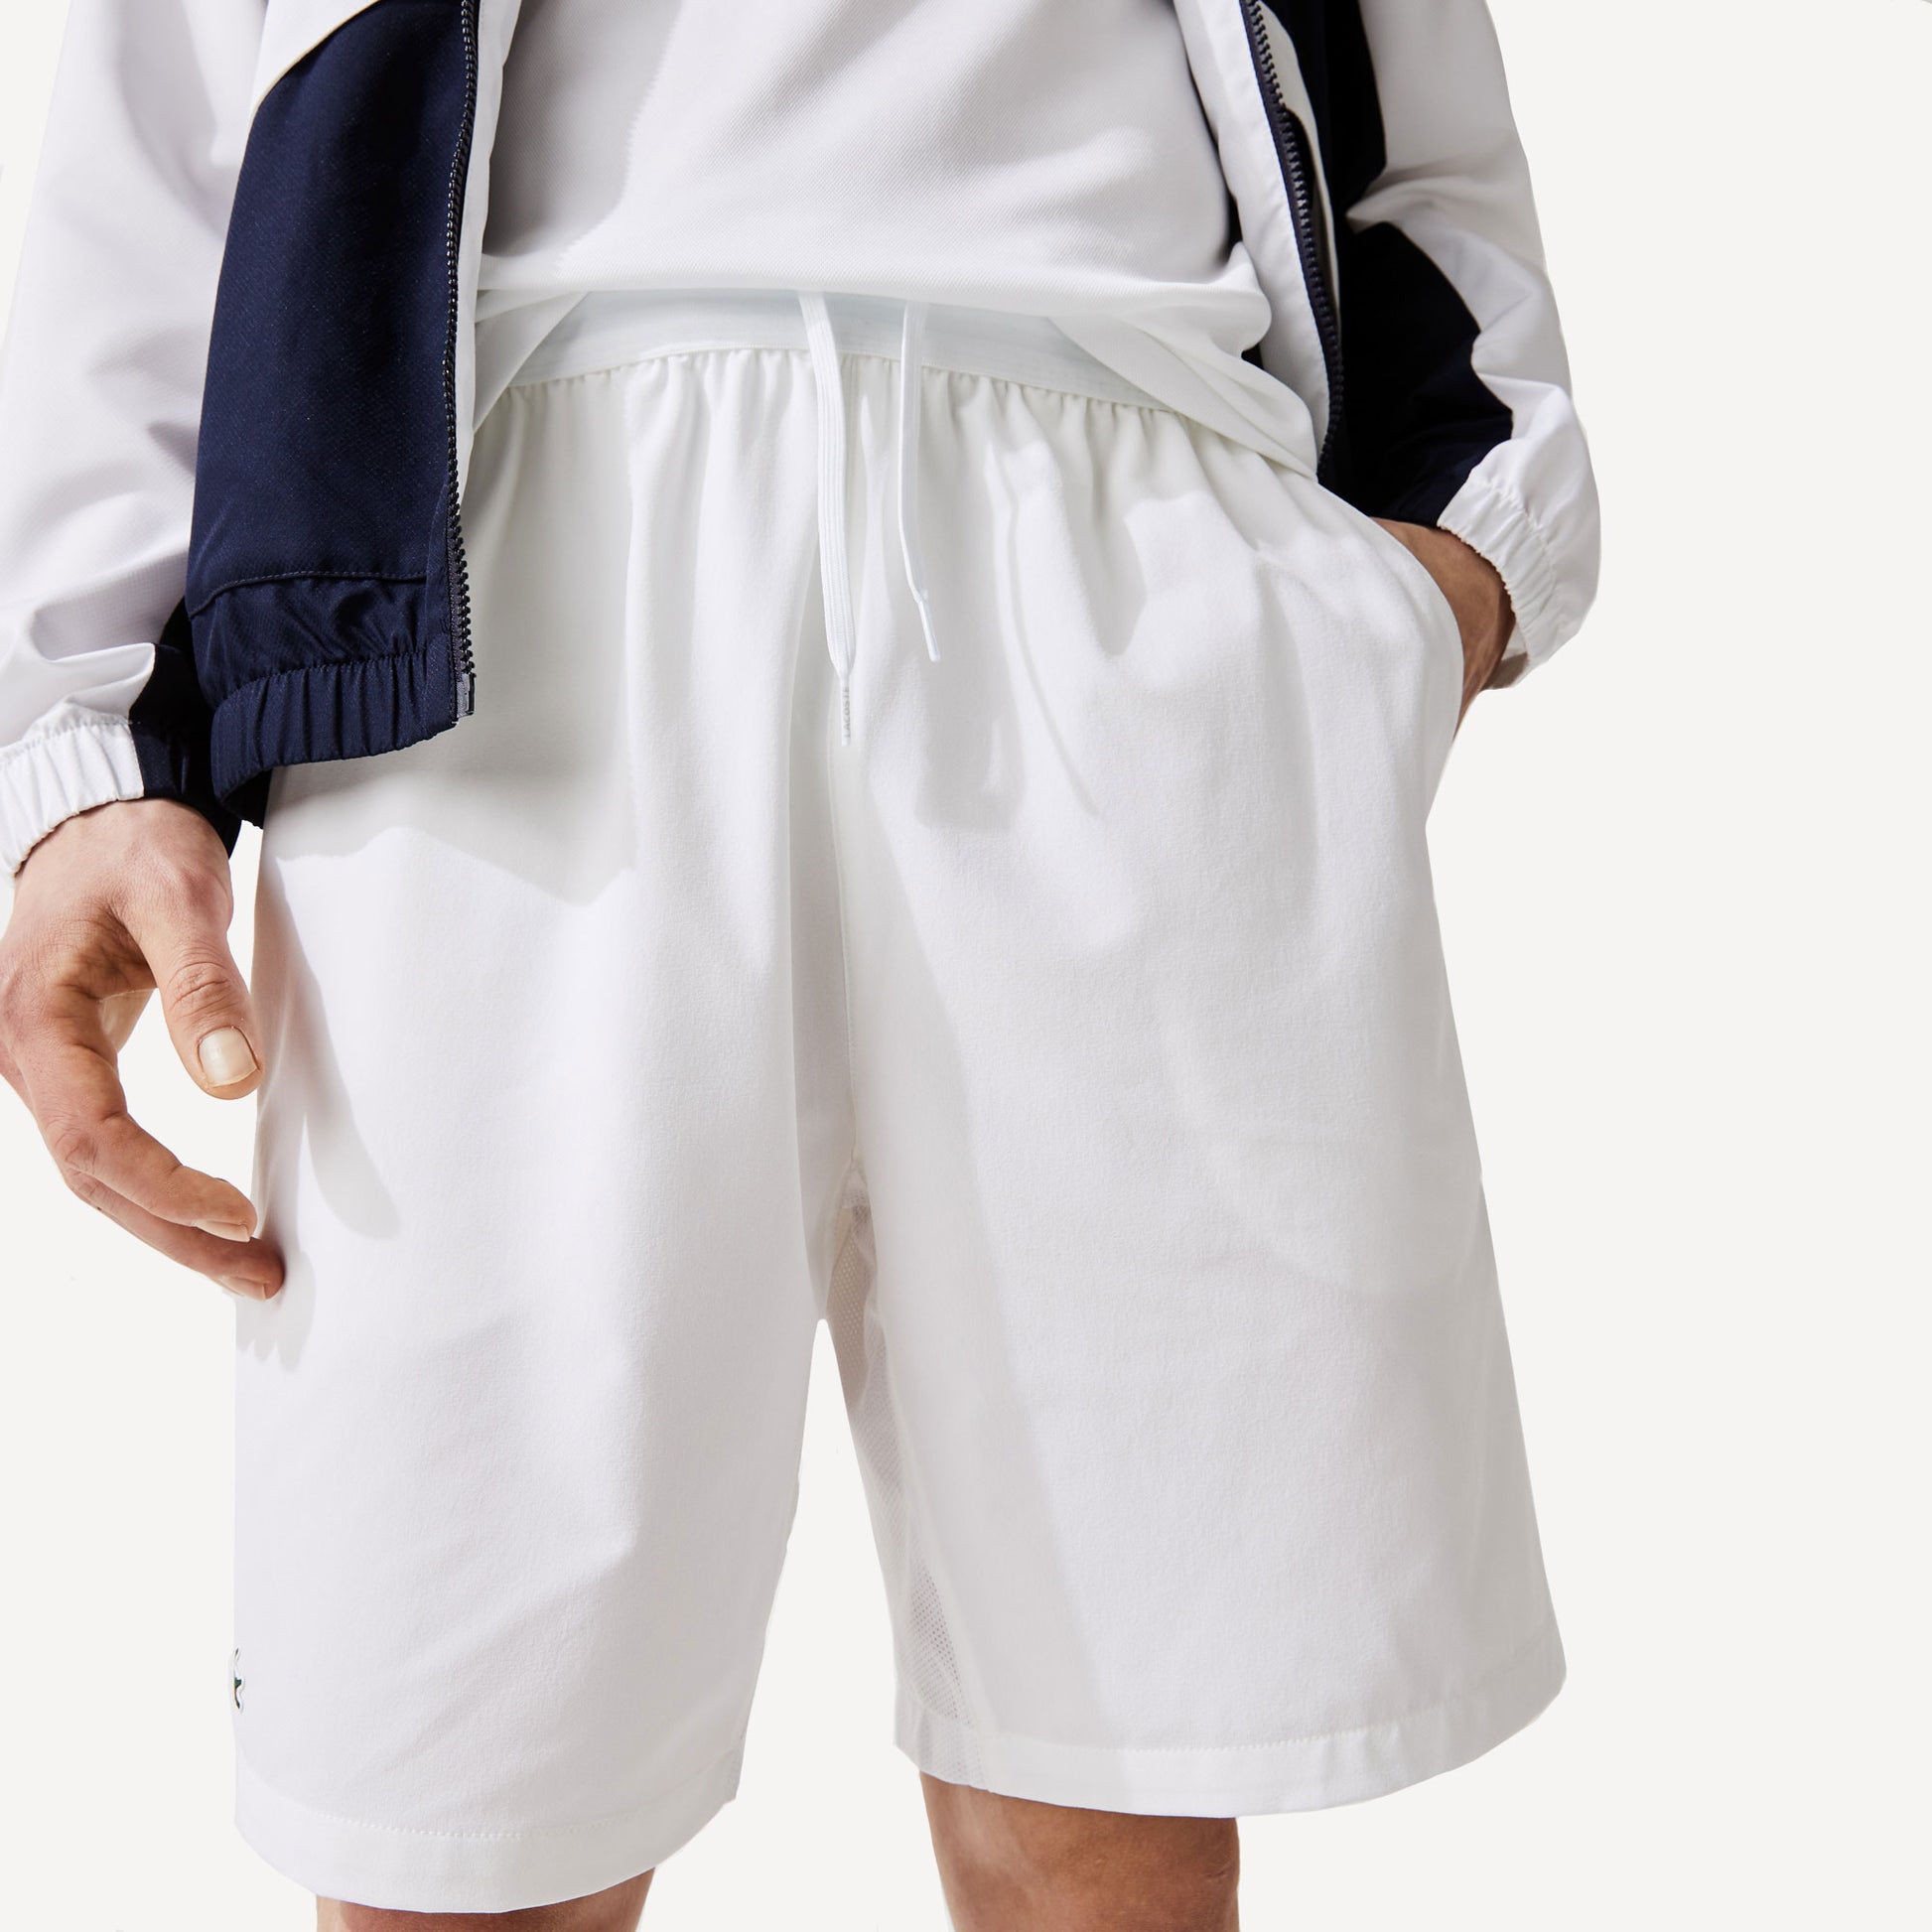 Lacoste Men's Tennis Shorts White (3)